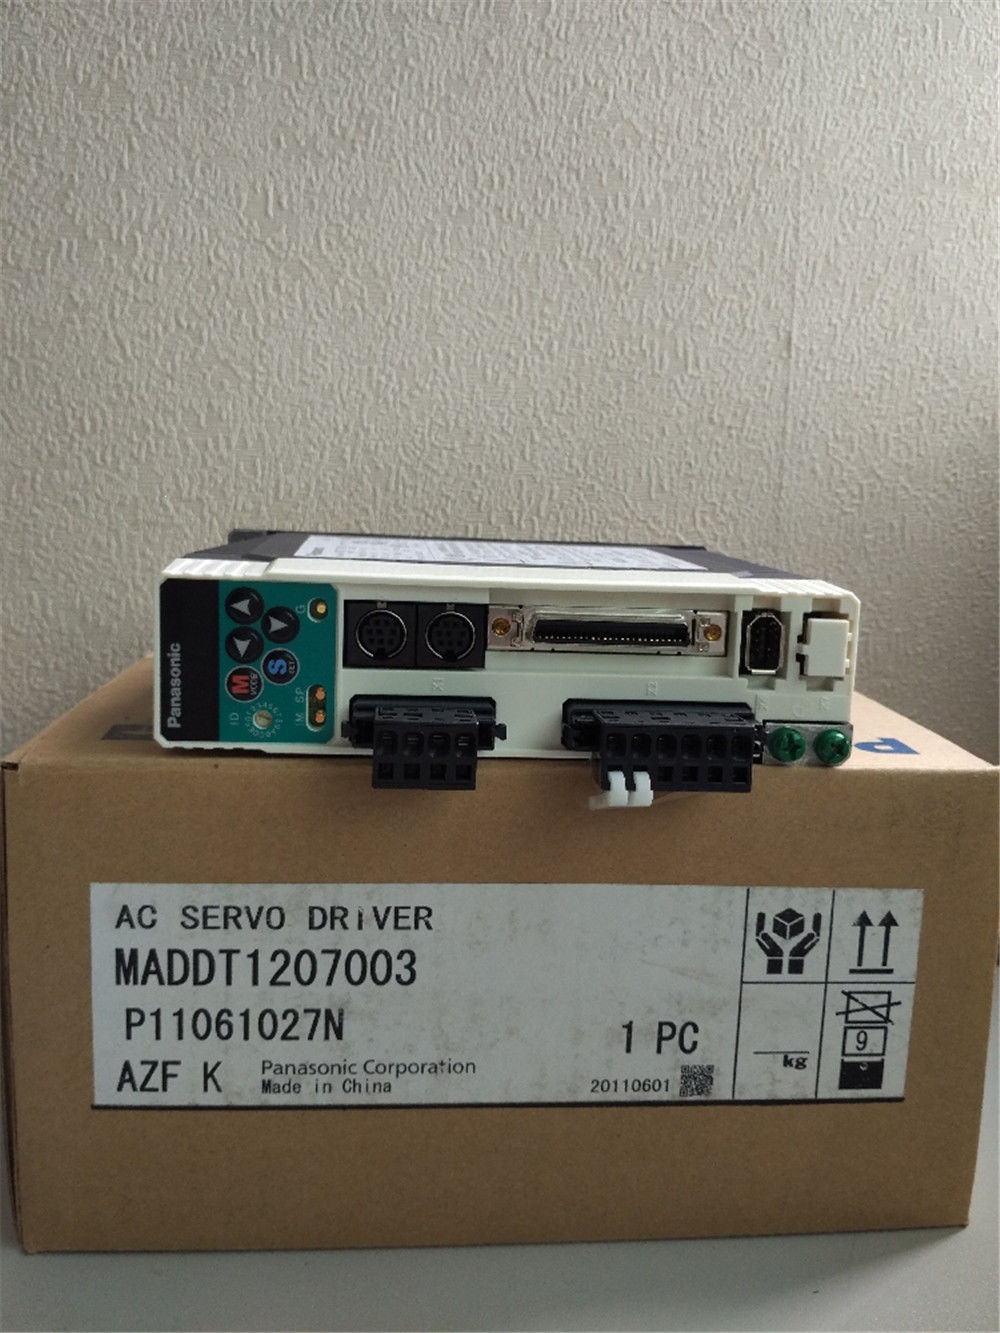 Brand NEW PANASONIC AC Servo drive MADDT1207003 in box